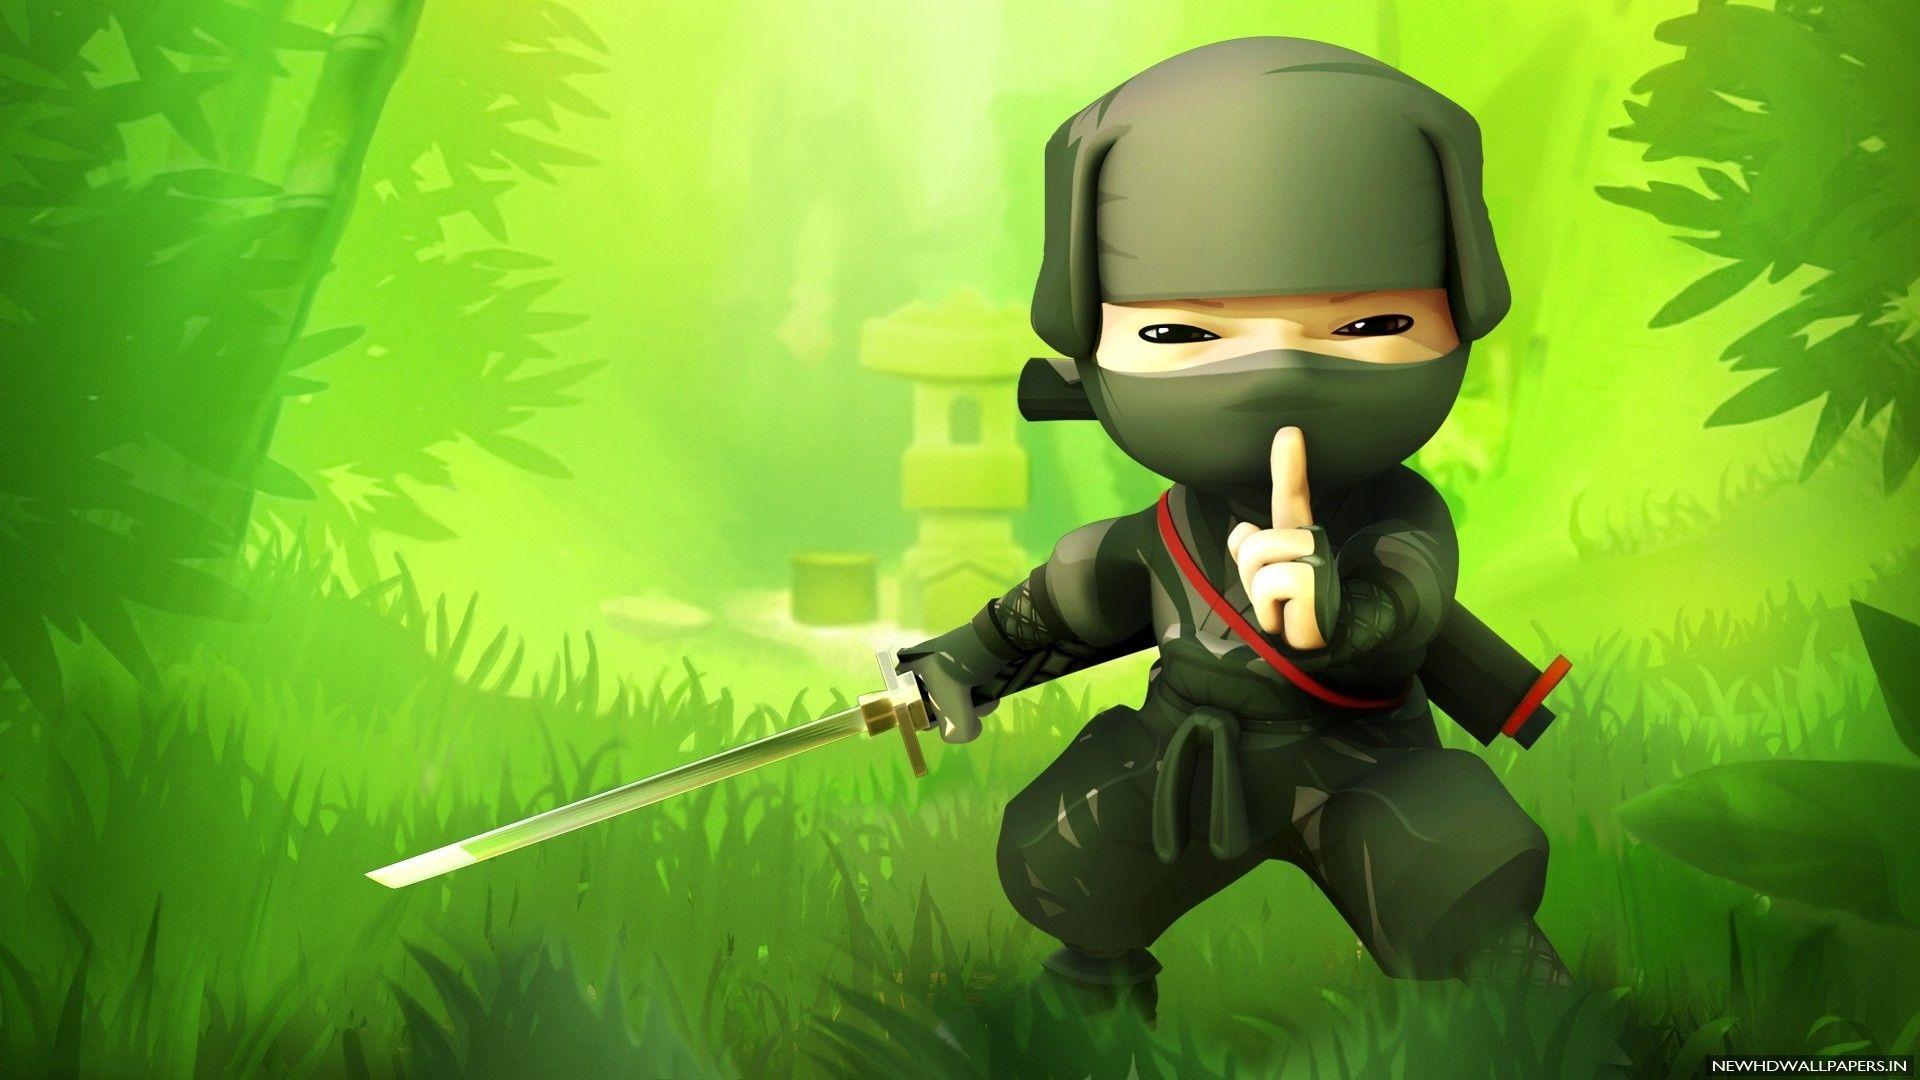 Ninja Wallpaper, HD Creative Ninja Photo, Full HD Wallpaper